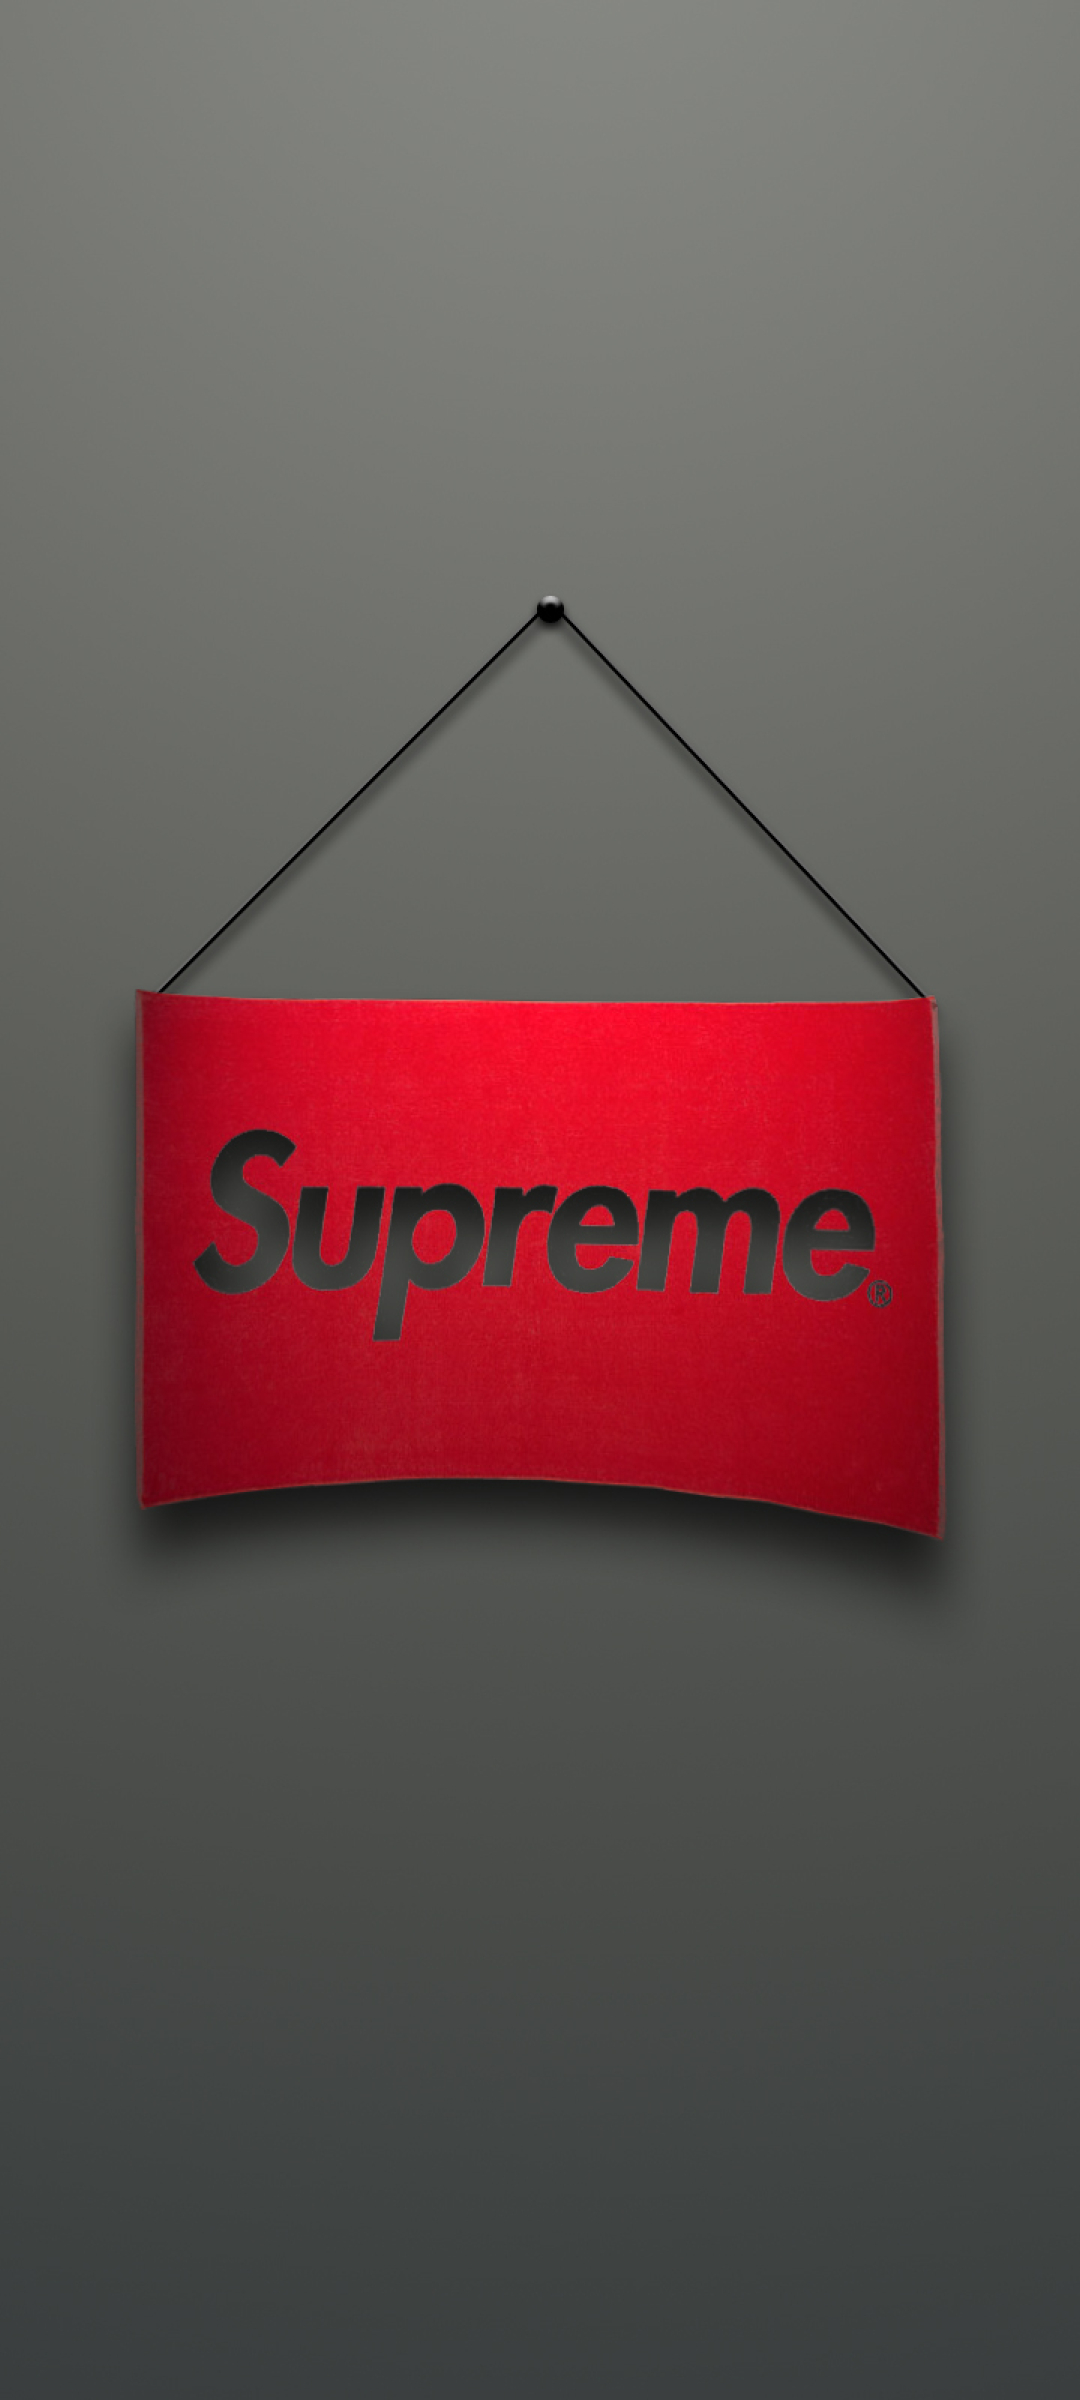 Supreme logo wallpaper  Supreme iphone wallpaper, Supreme wallpaper, Supreme  logo